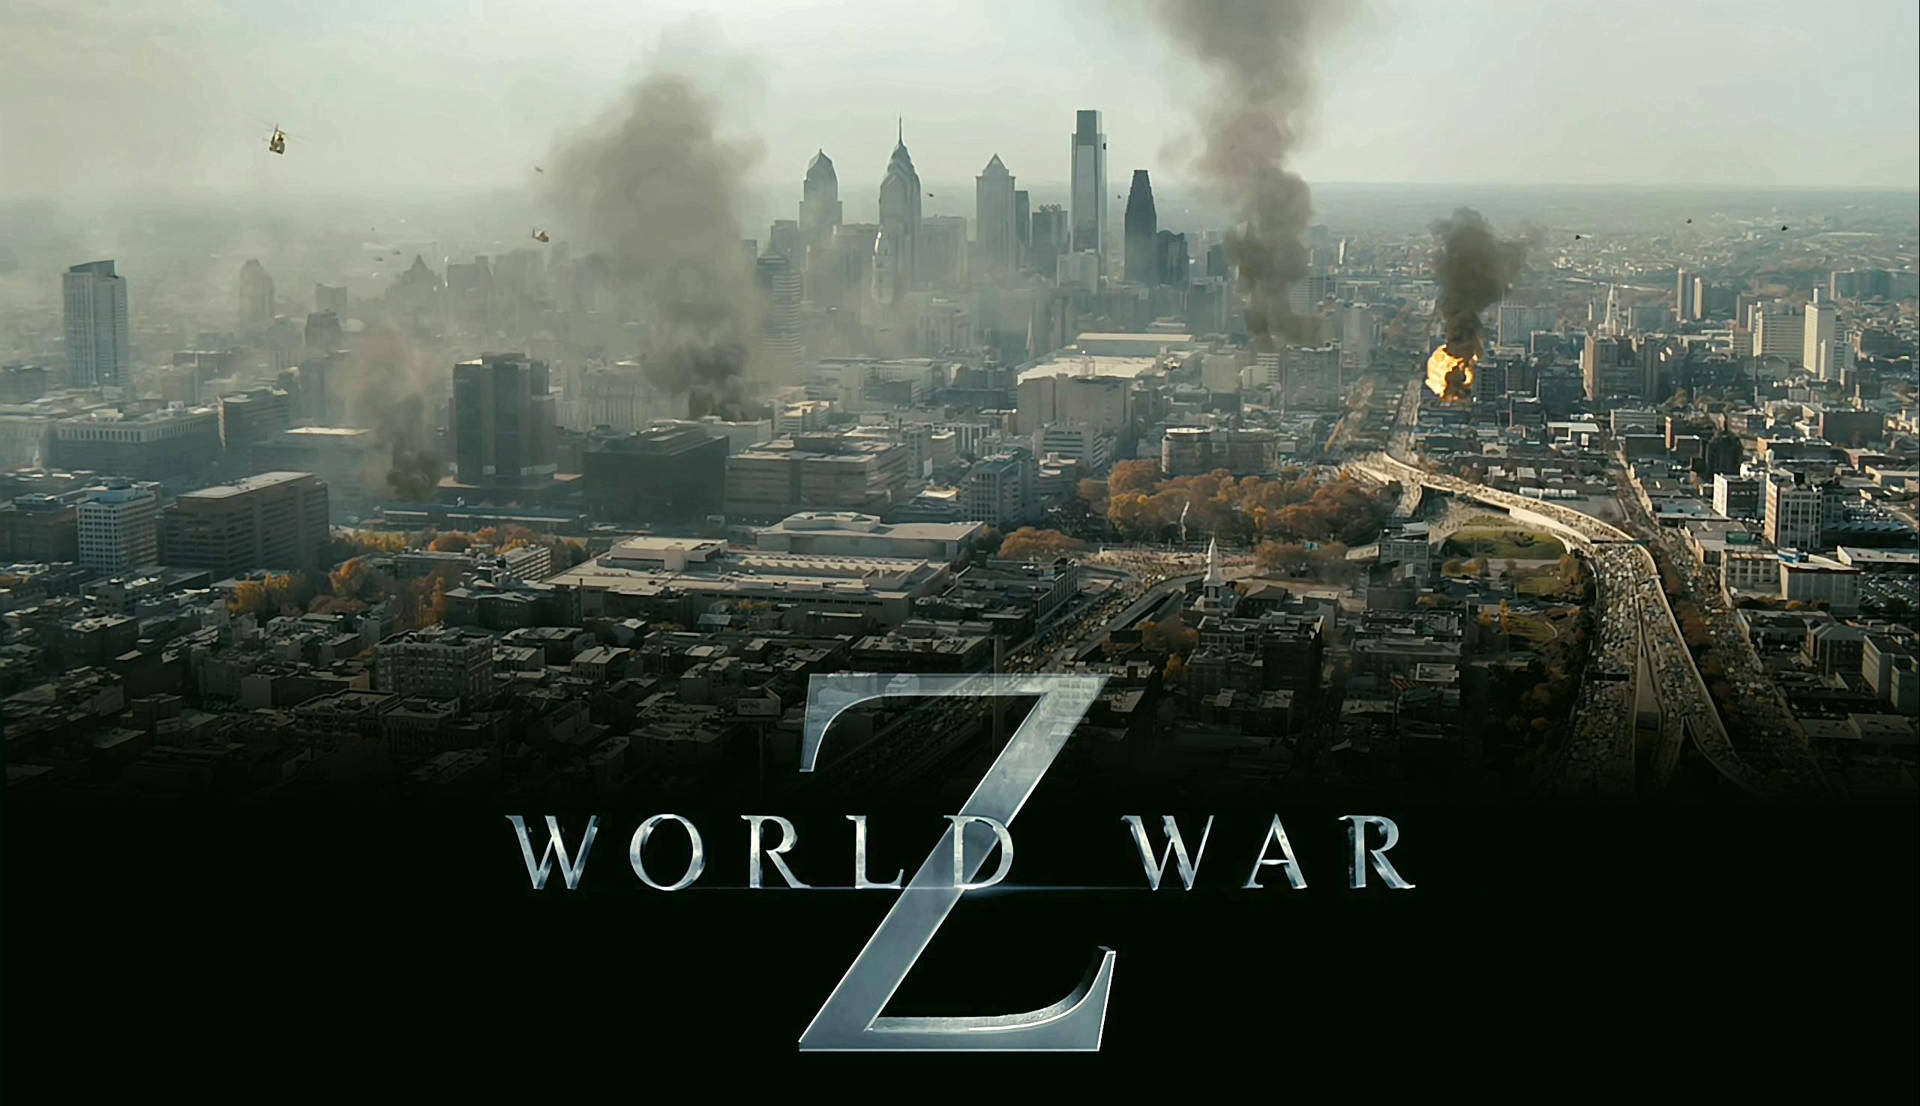 World War Z Chaos Poster Background